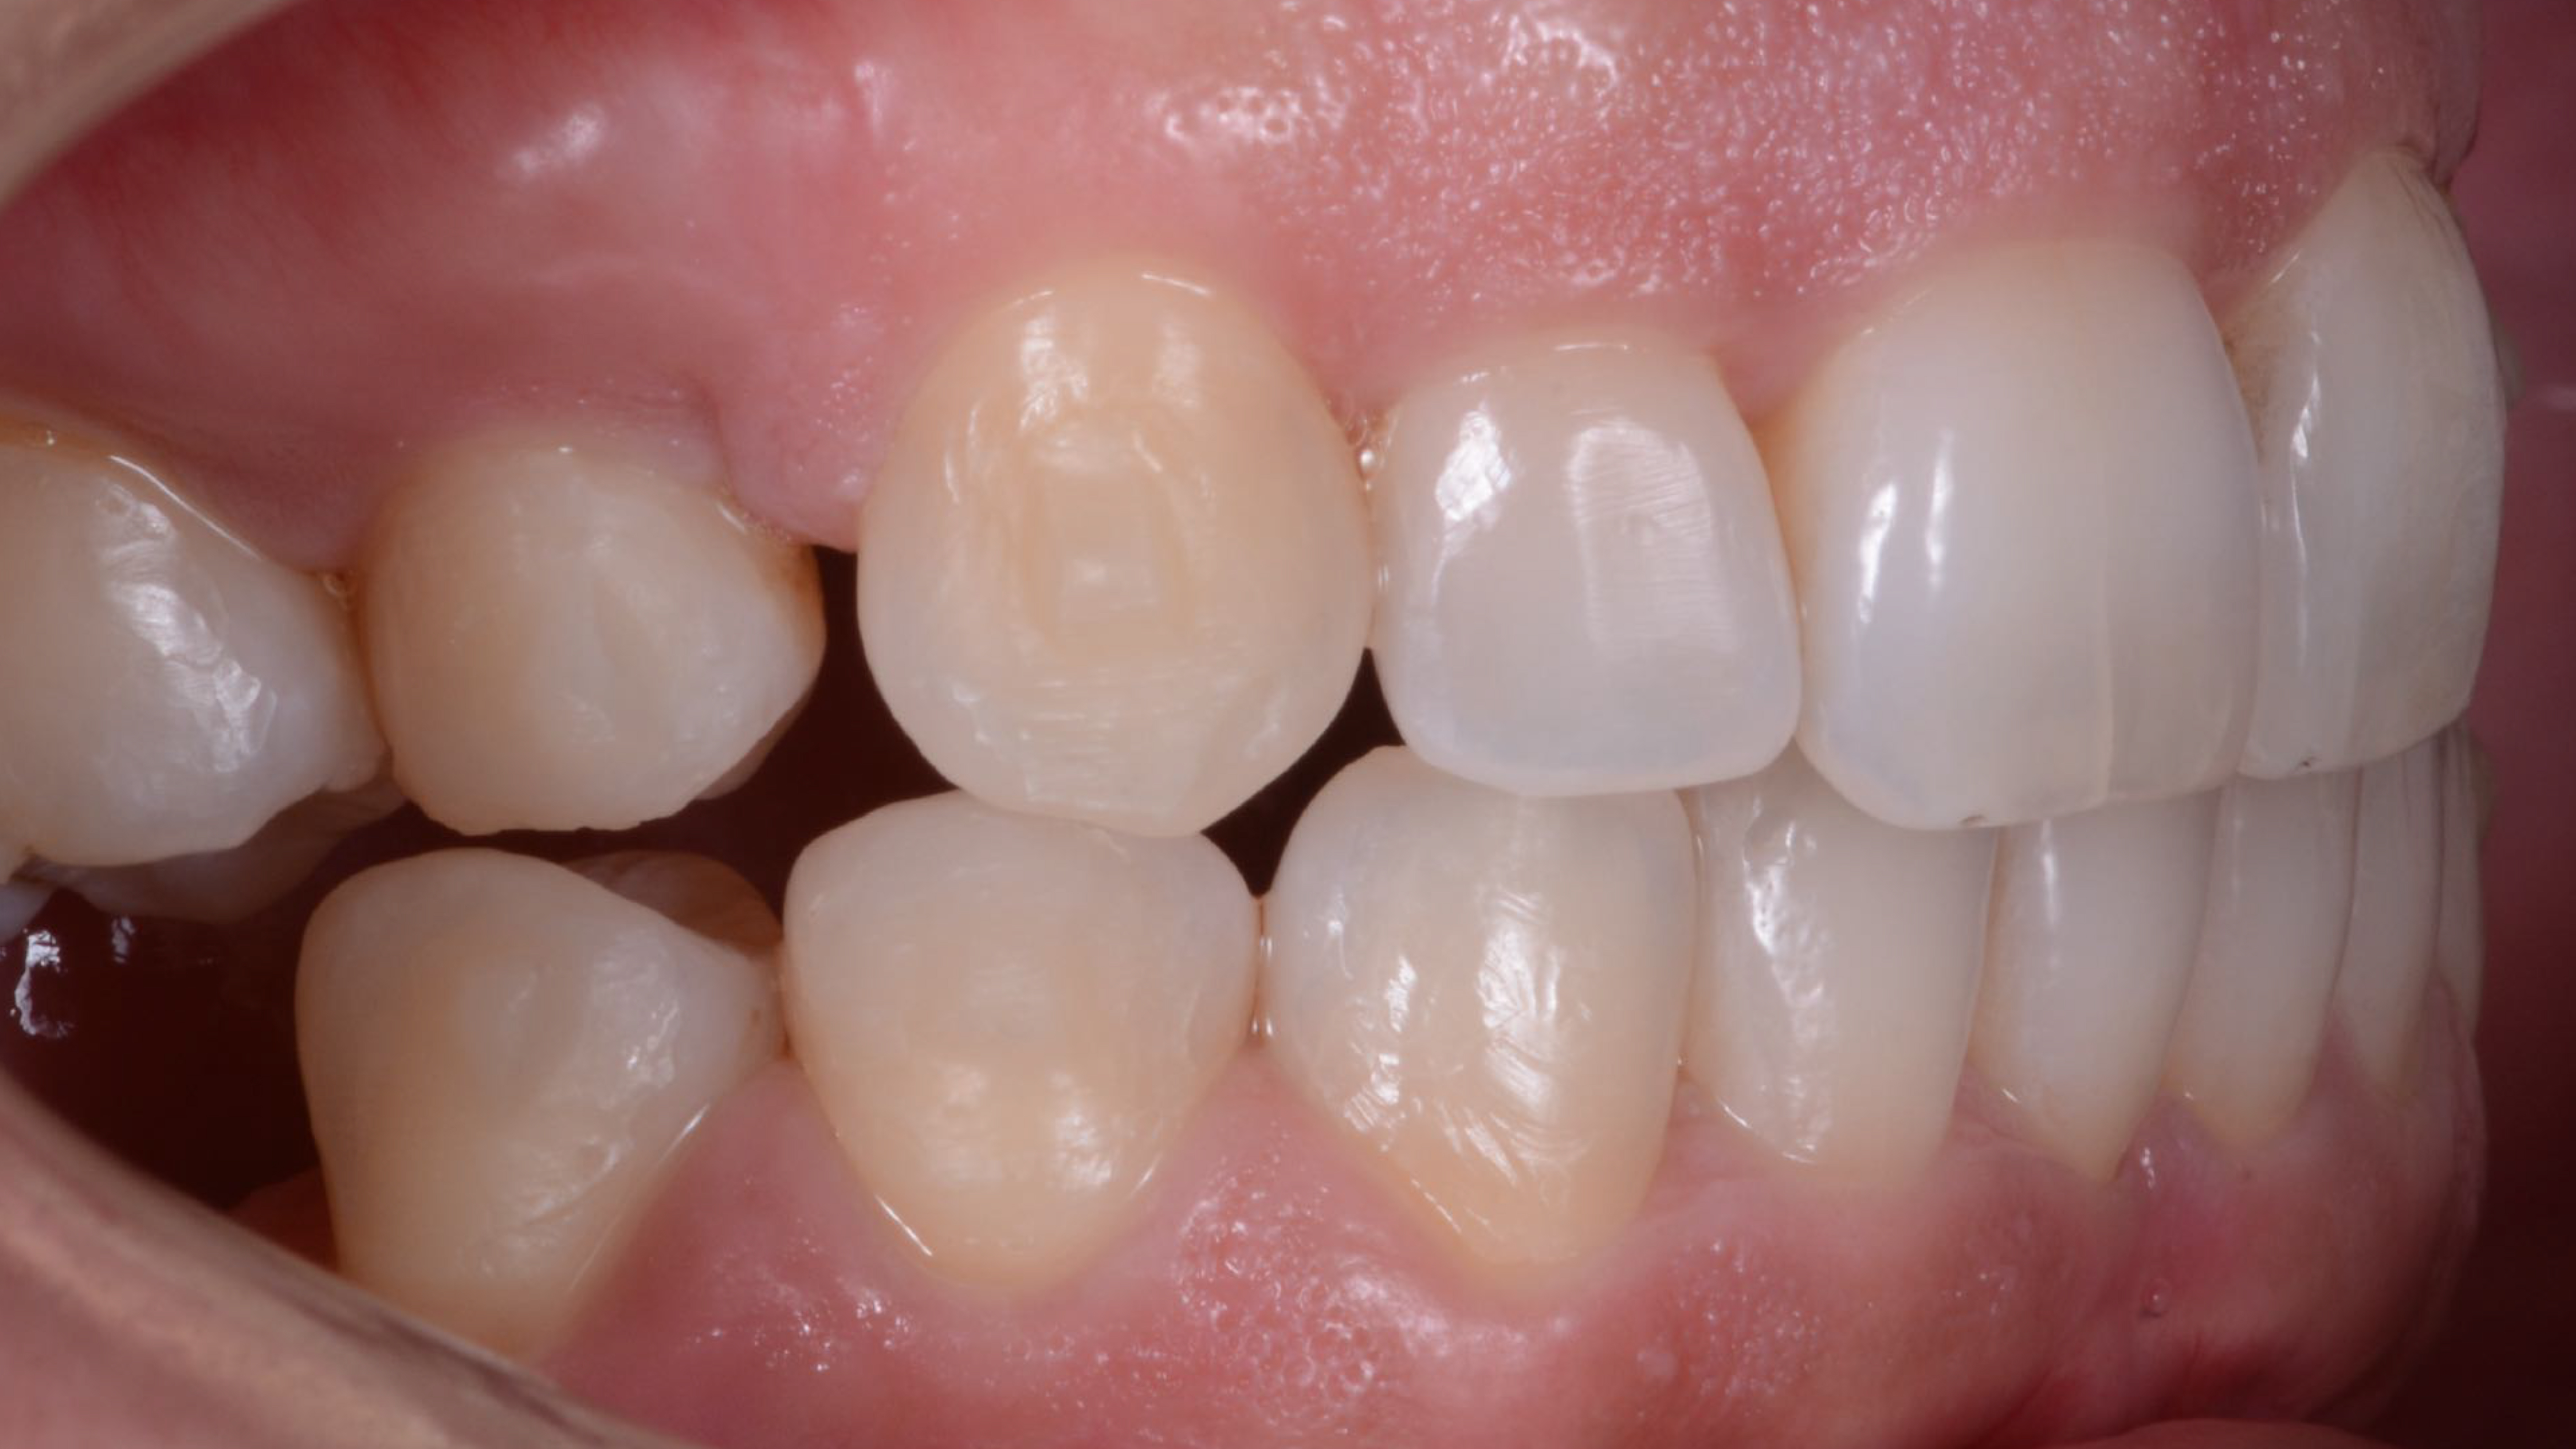 Fig. 2: Large gaps between the teeth caused by poor orthodontic planning.